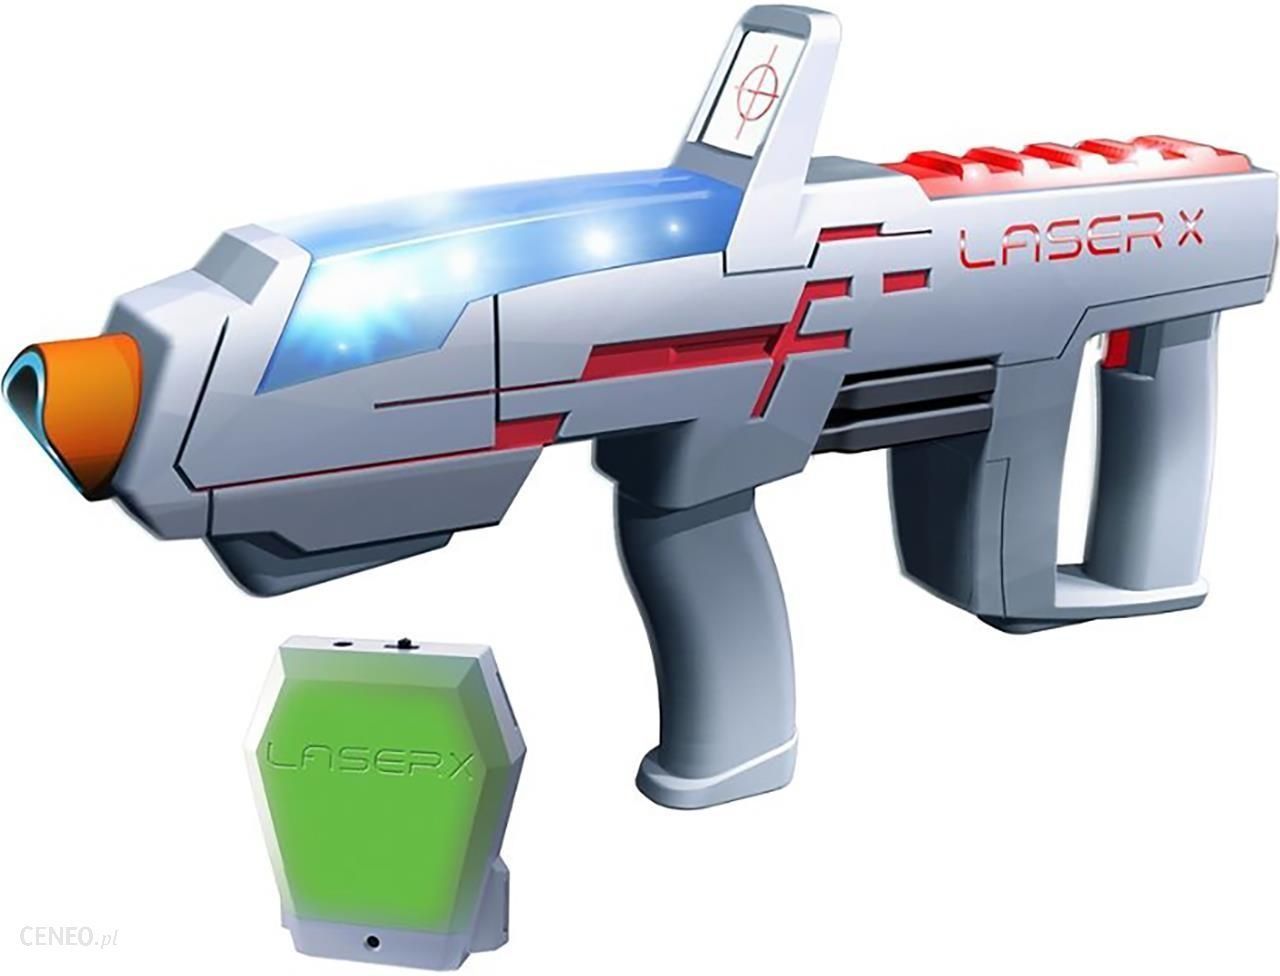 TM Toys Laser-X pistolet